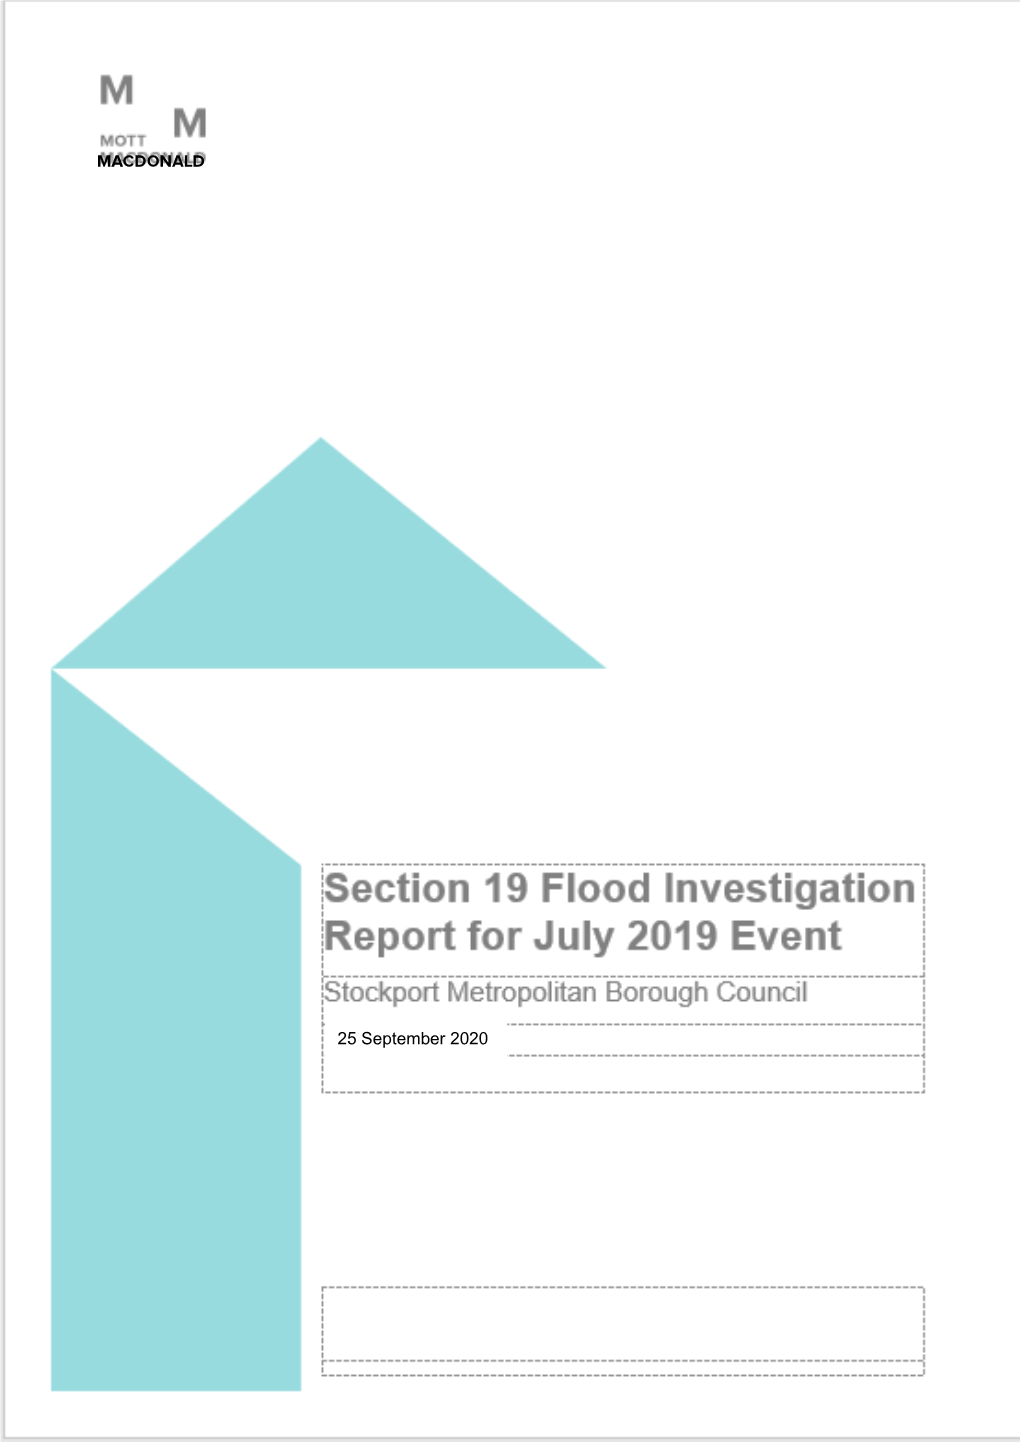 Section 19 Flod Investigation Report for July 2019 Flood Event